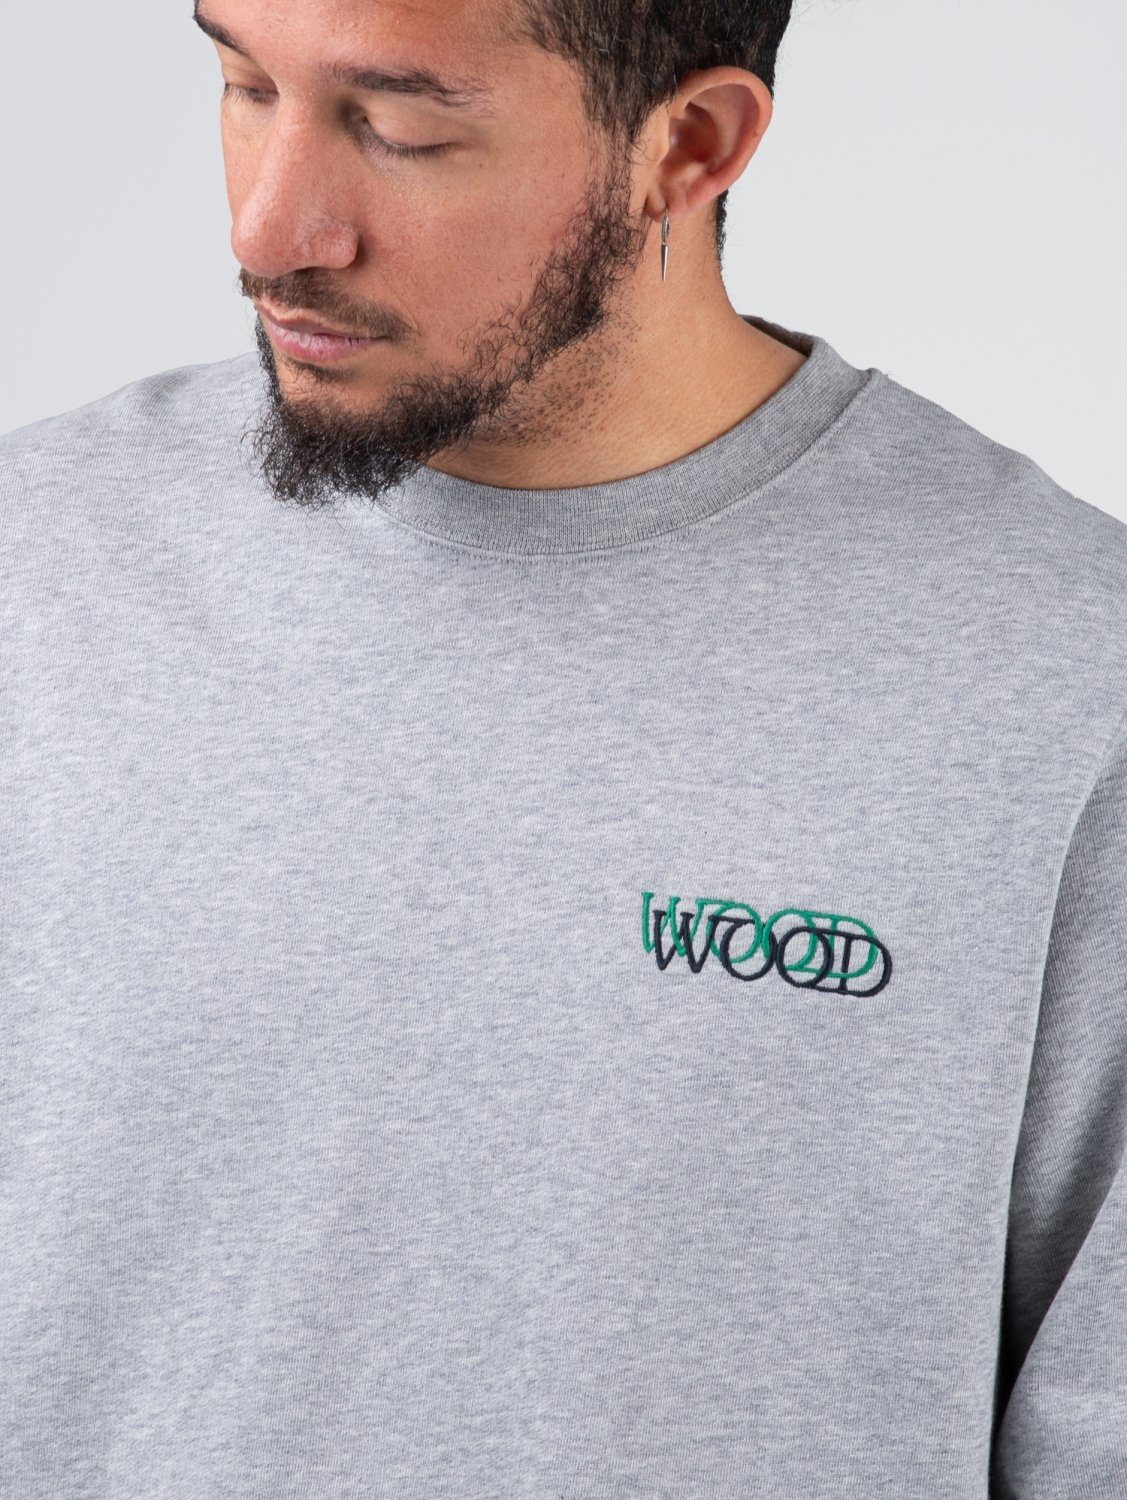 Sweatshirt Grey Hugh Wood Logo WOOD Melange Wood Sweater WOOD